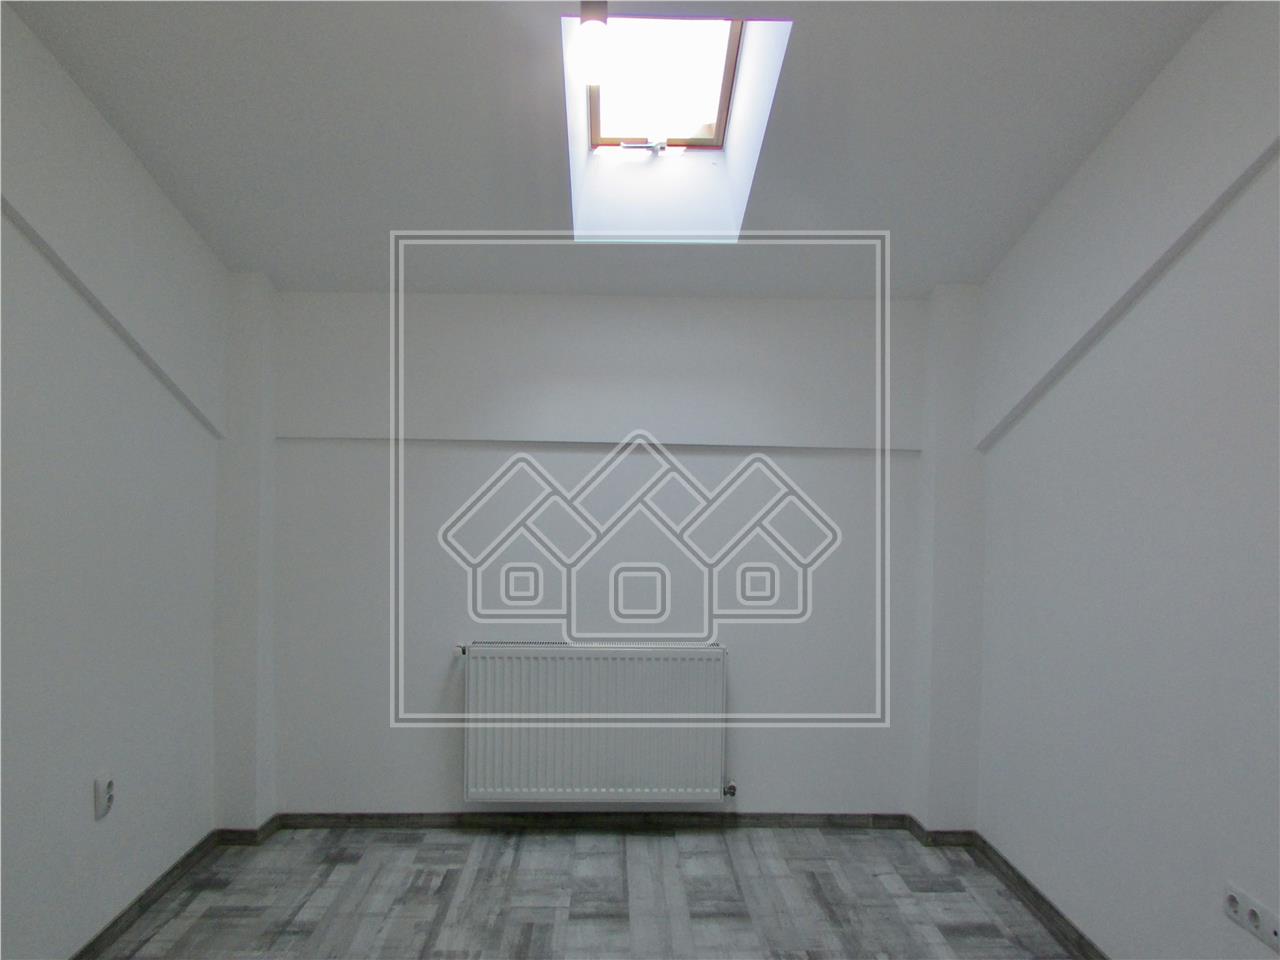 Wohnung zum Verkauf in Sibiu - 3 Zimmer - und Dachgeschoss - fertig